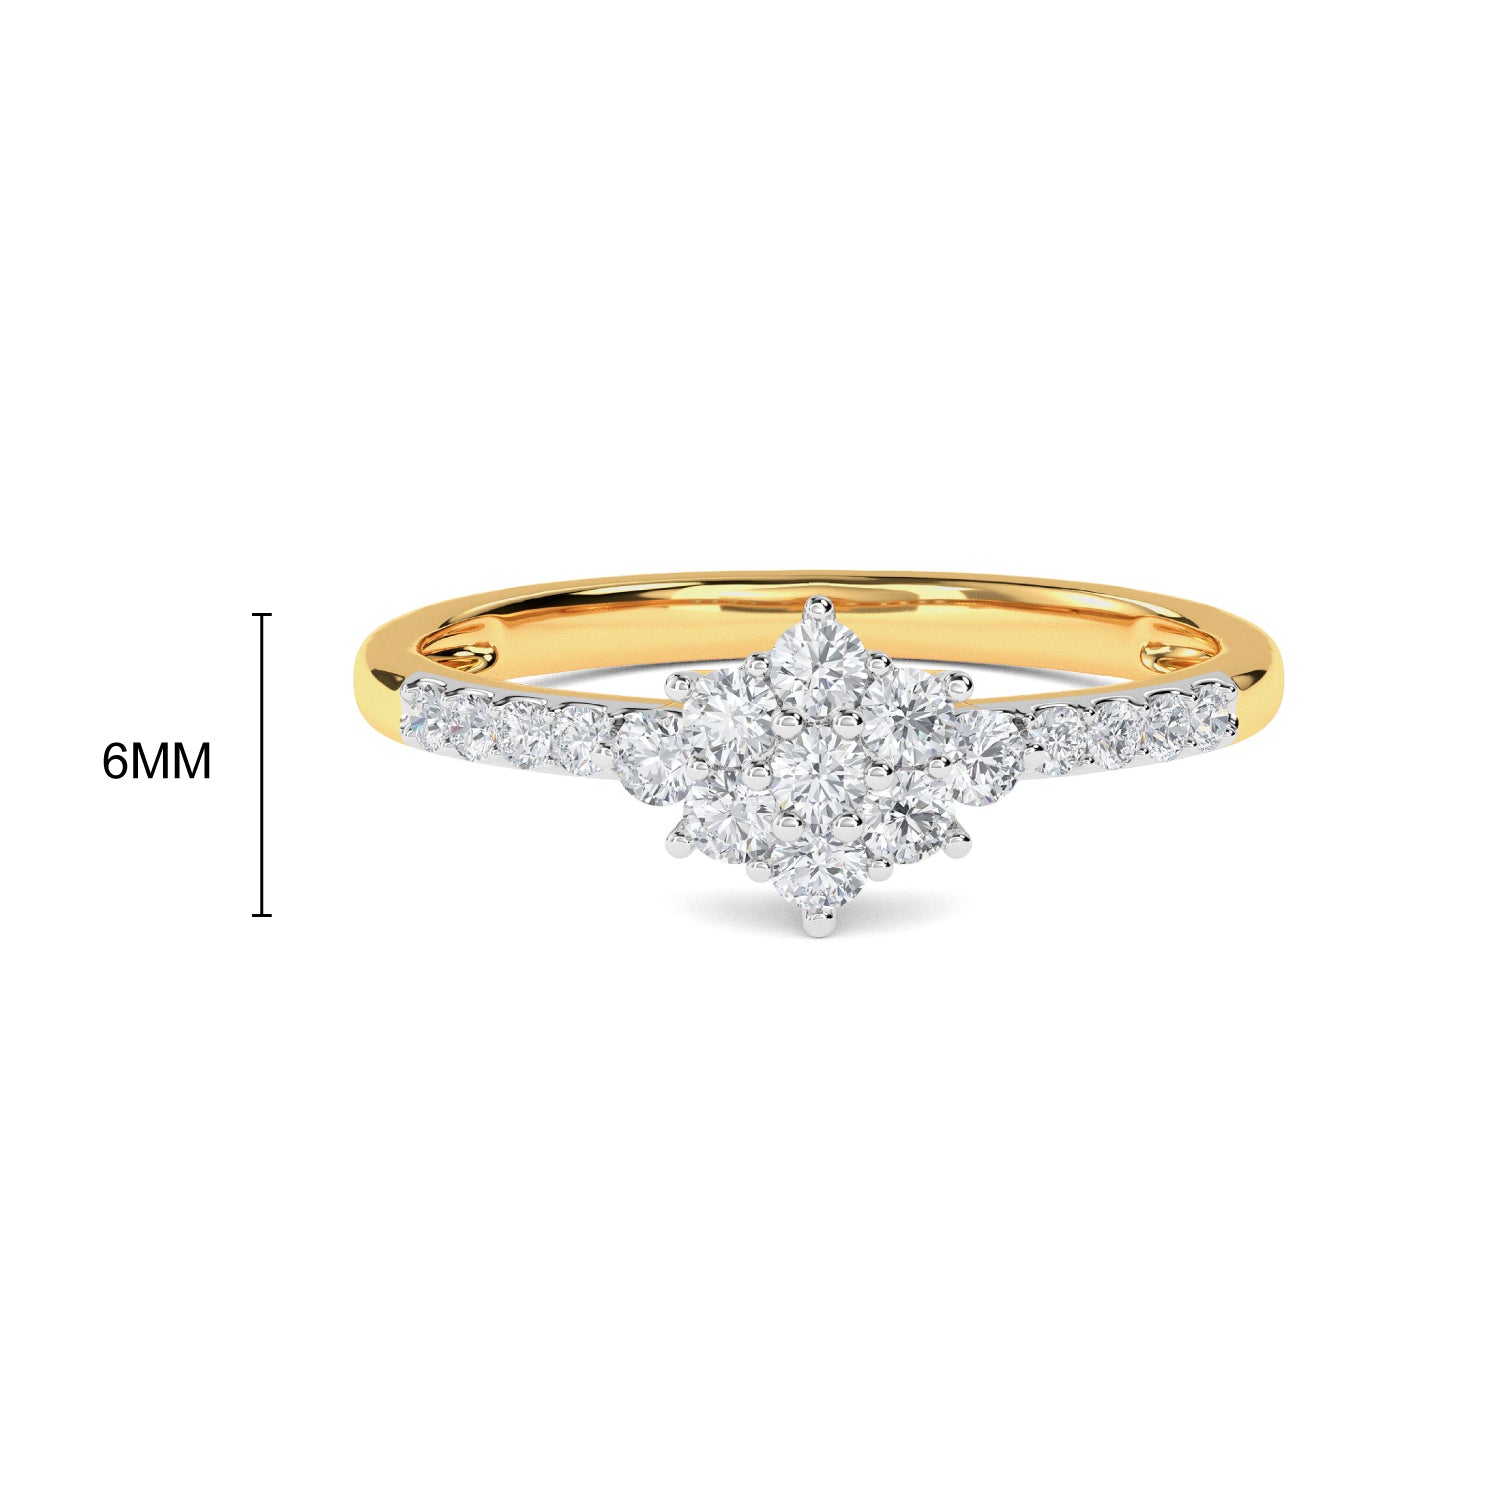 Explore Our Wide Range of Rings Online | Bhima Jewellers | Buy now